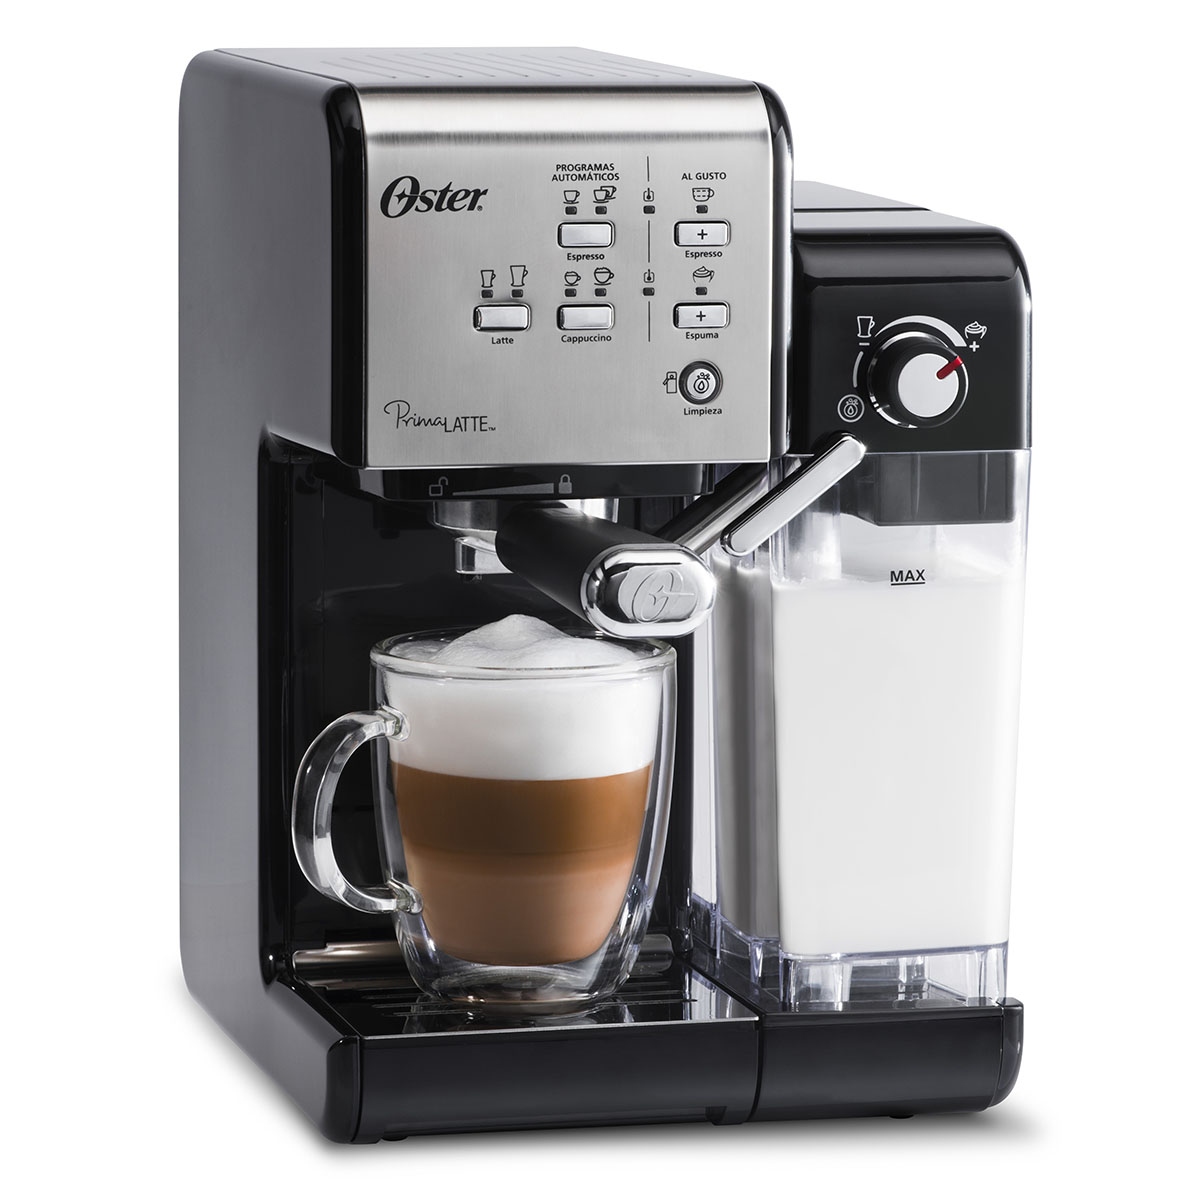 Filter Coffee maker Oster Prima Latte 2 cups